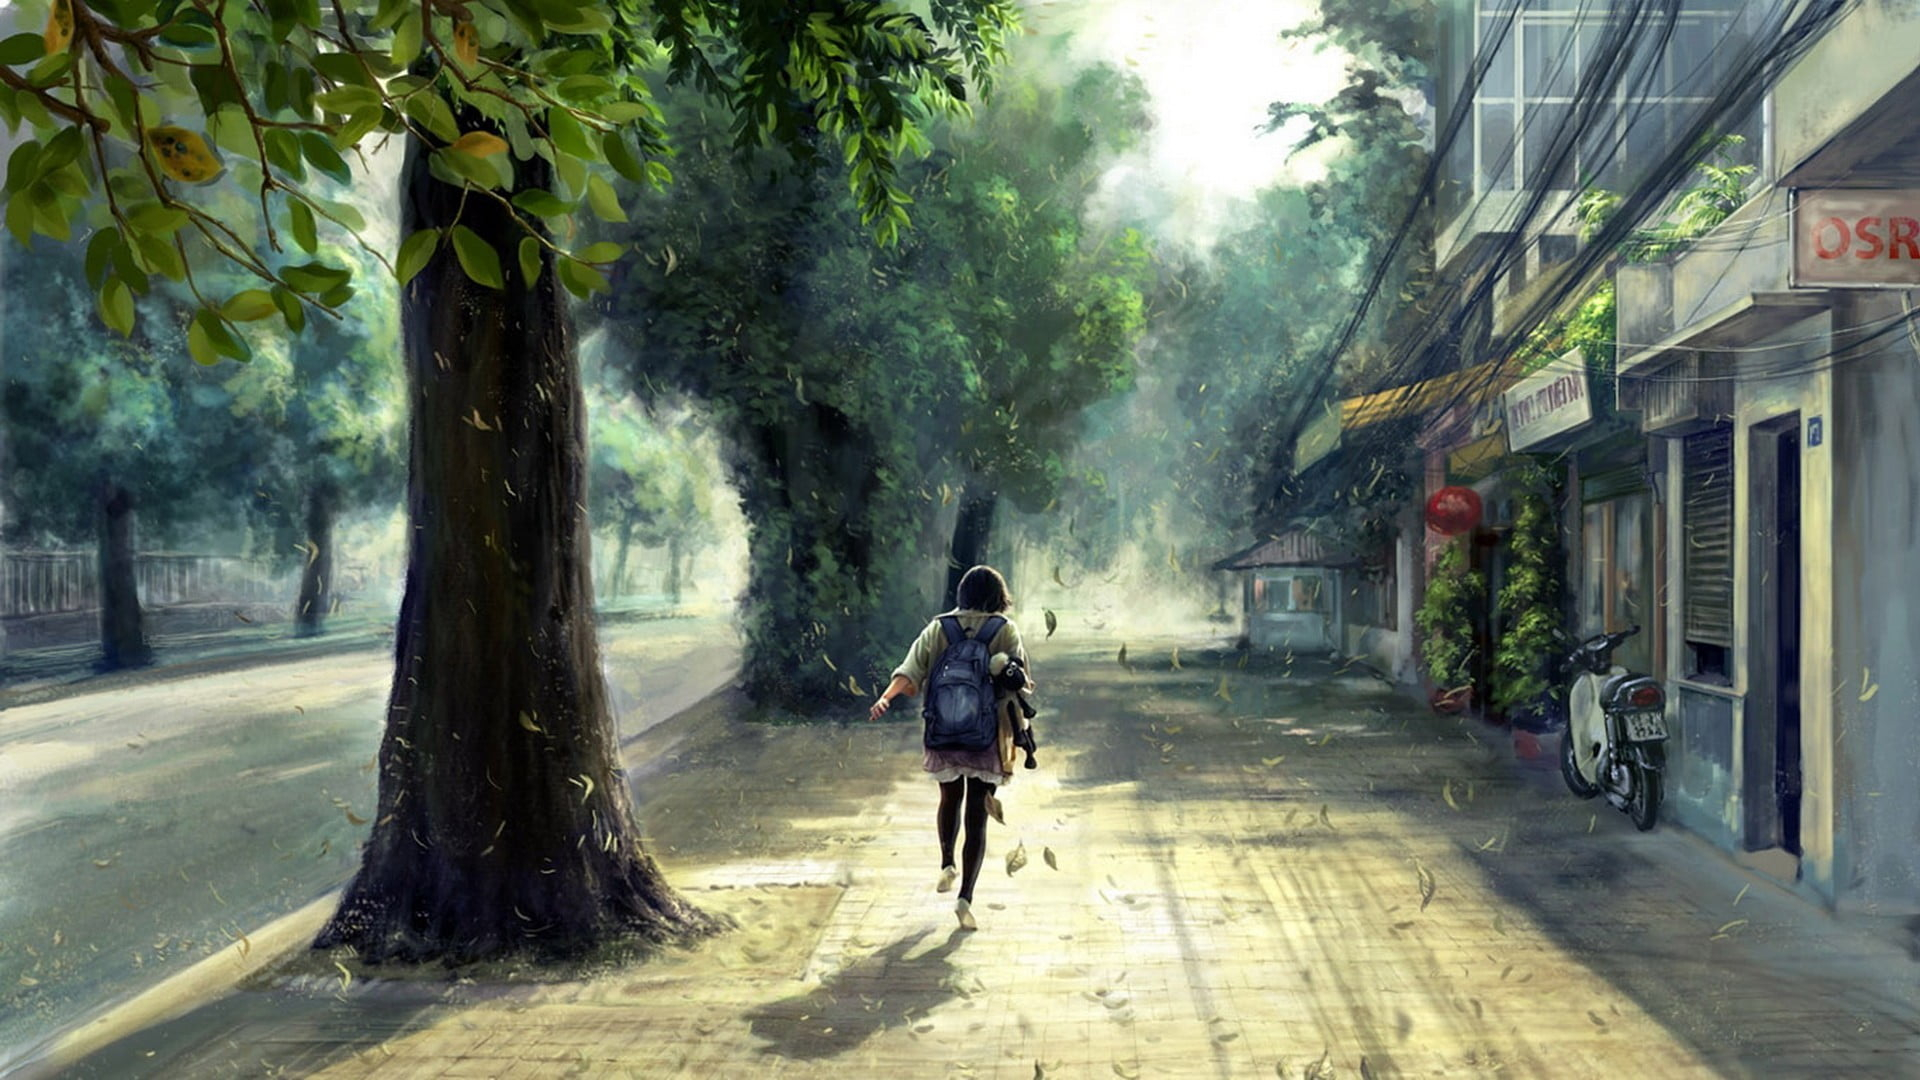 Wallpaper person’s black pants, woman running under trees, artwork, building